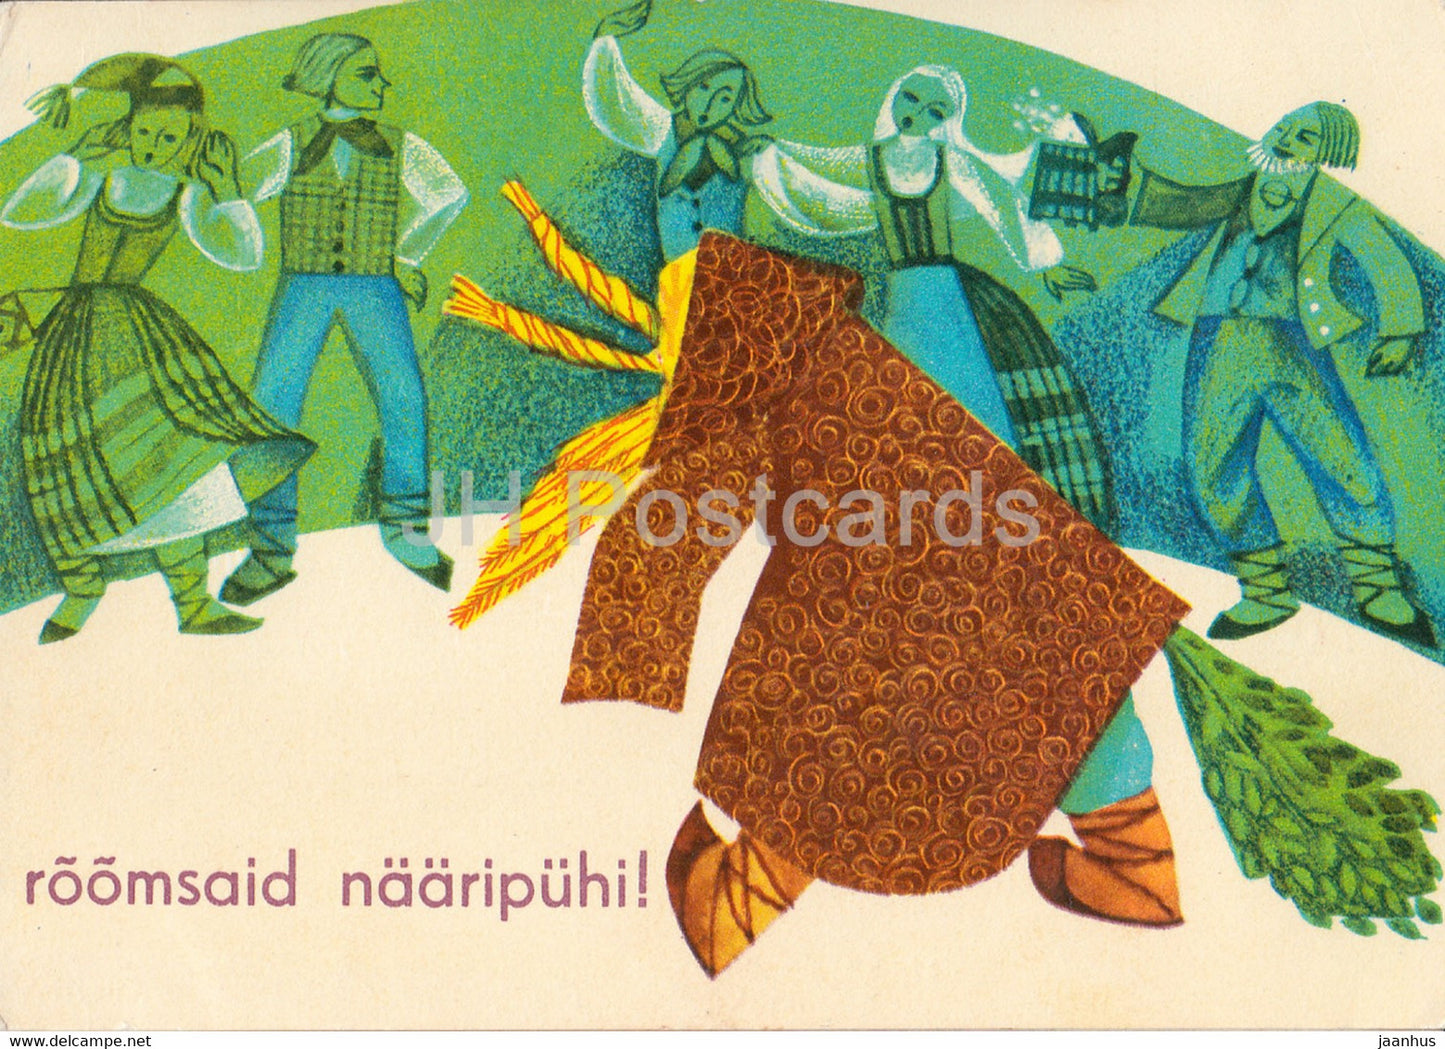 New Year Greeting Card by I. Sampu Raudsepp - folk costumes - Yule goat - 1968 - Estonia USSR - used - JH Postcards